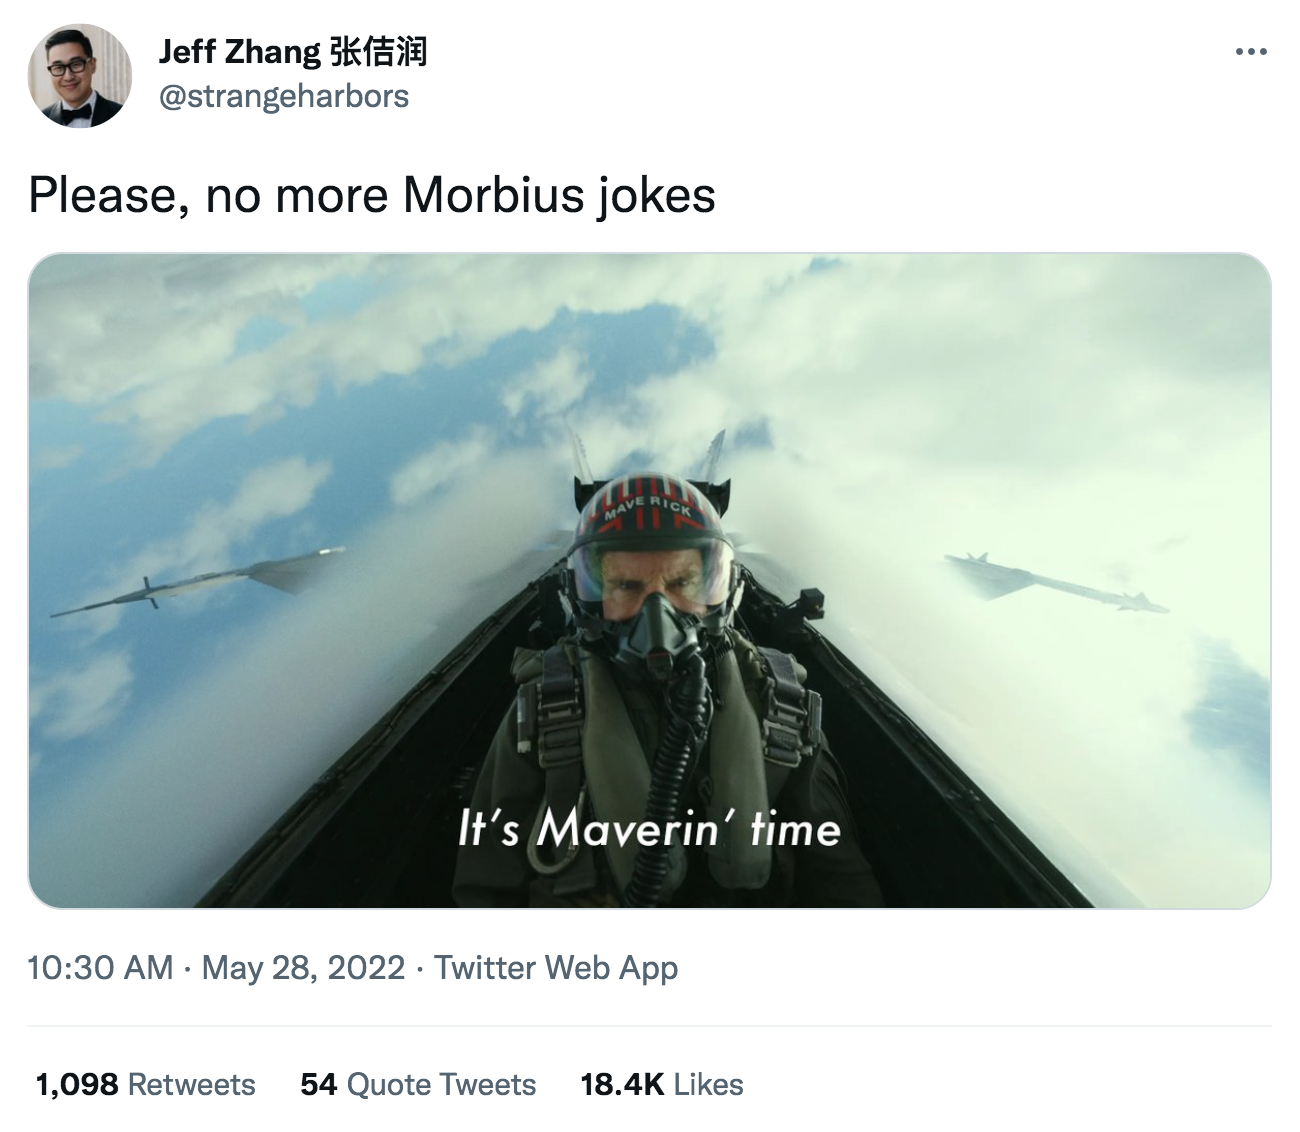 Morbius Memes - it's morbin time - Top Gun: Maverick - Jeff Zhang Please, no more Morbius jokes . Twitter Web App 1,098 54 Quote Tweets It's Maverin' time ....